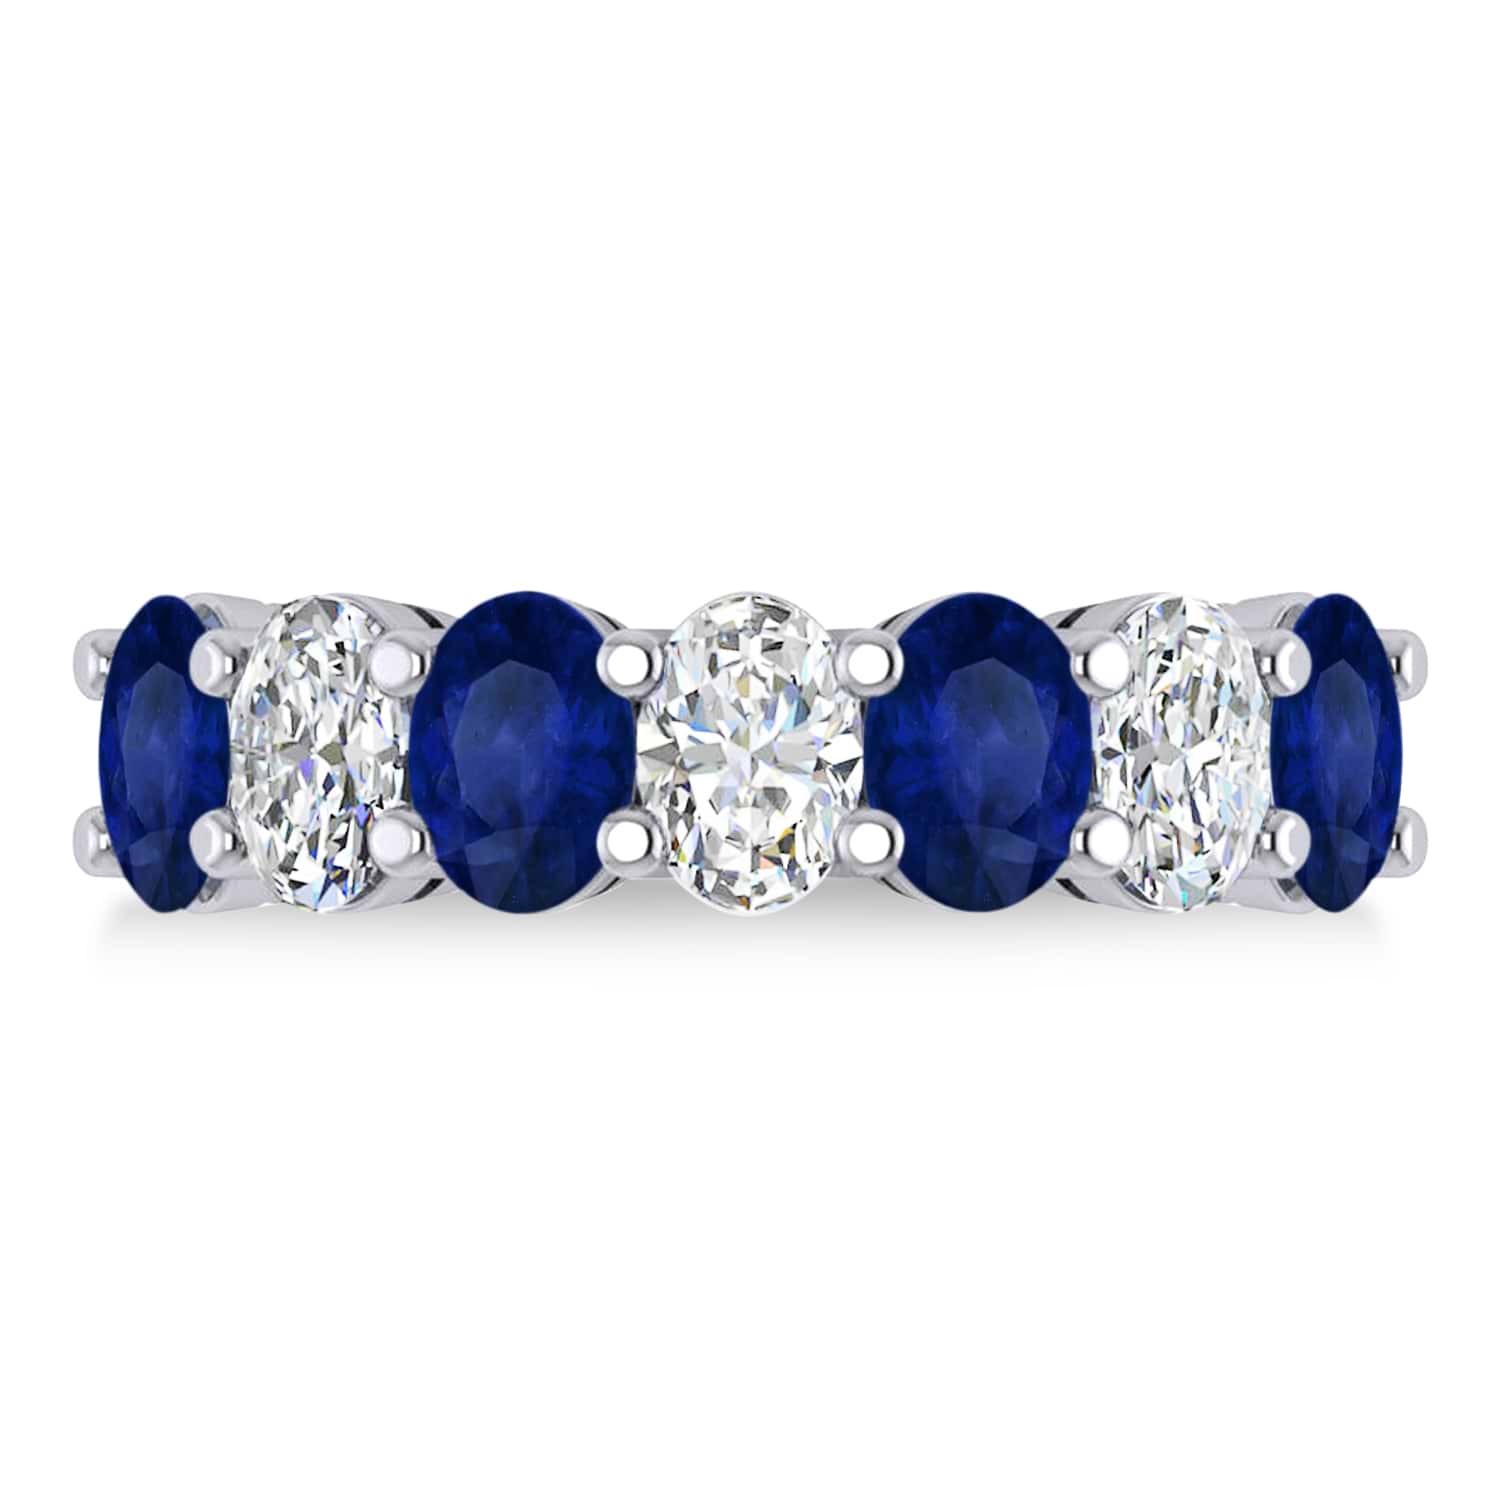 Oval Diamond & Blue Sapphire Seven Stone Ring 14k White Gold (3.90ct)